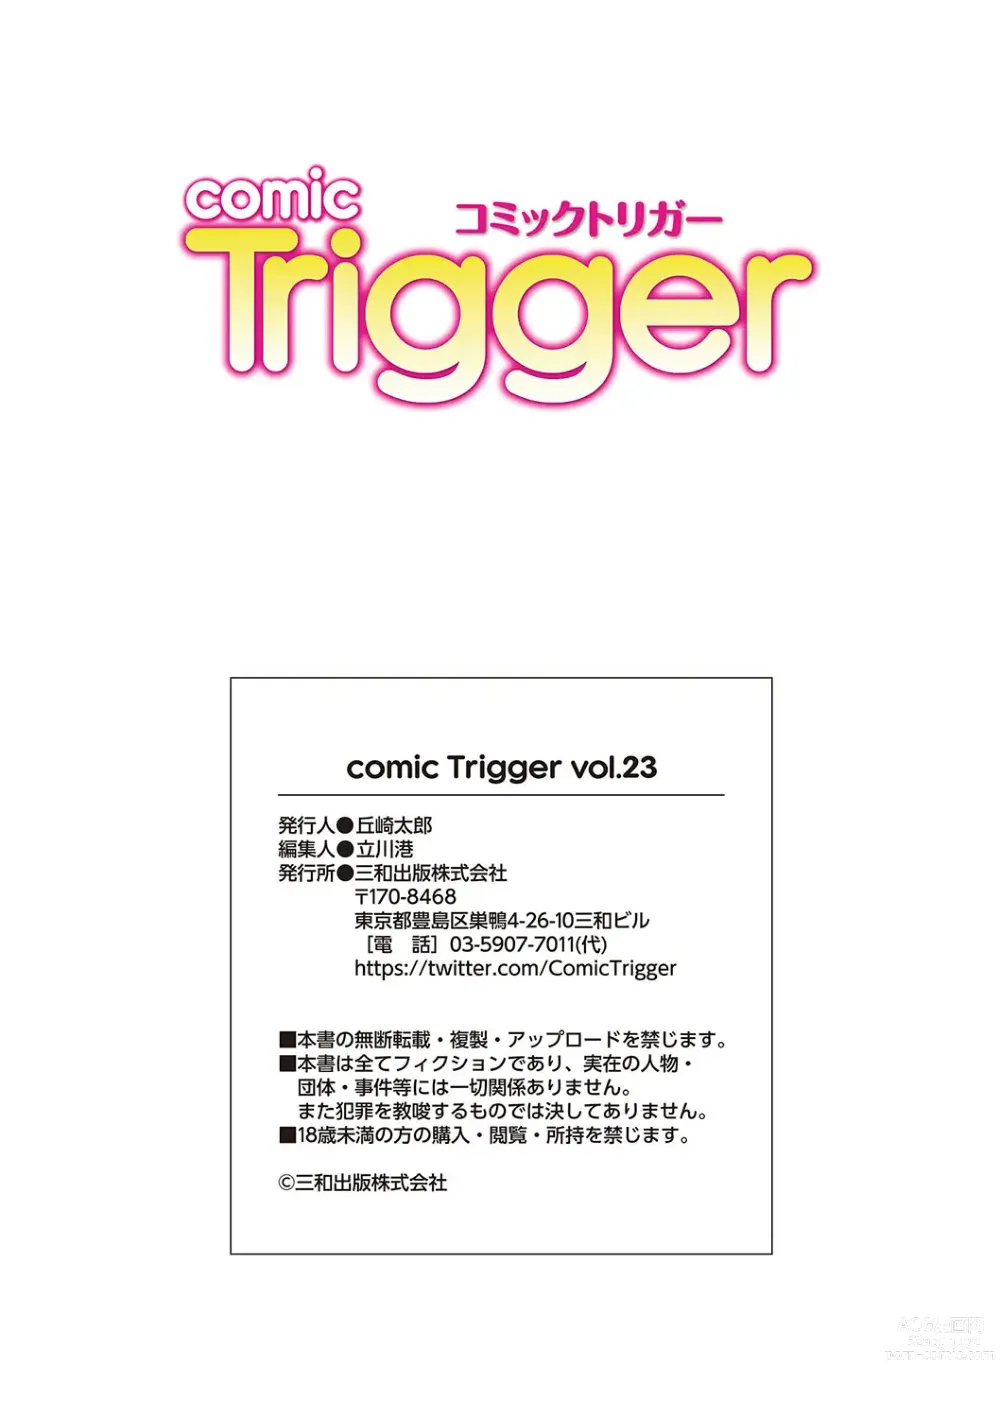 Page 148 of manga comic Trigger vol.23